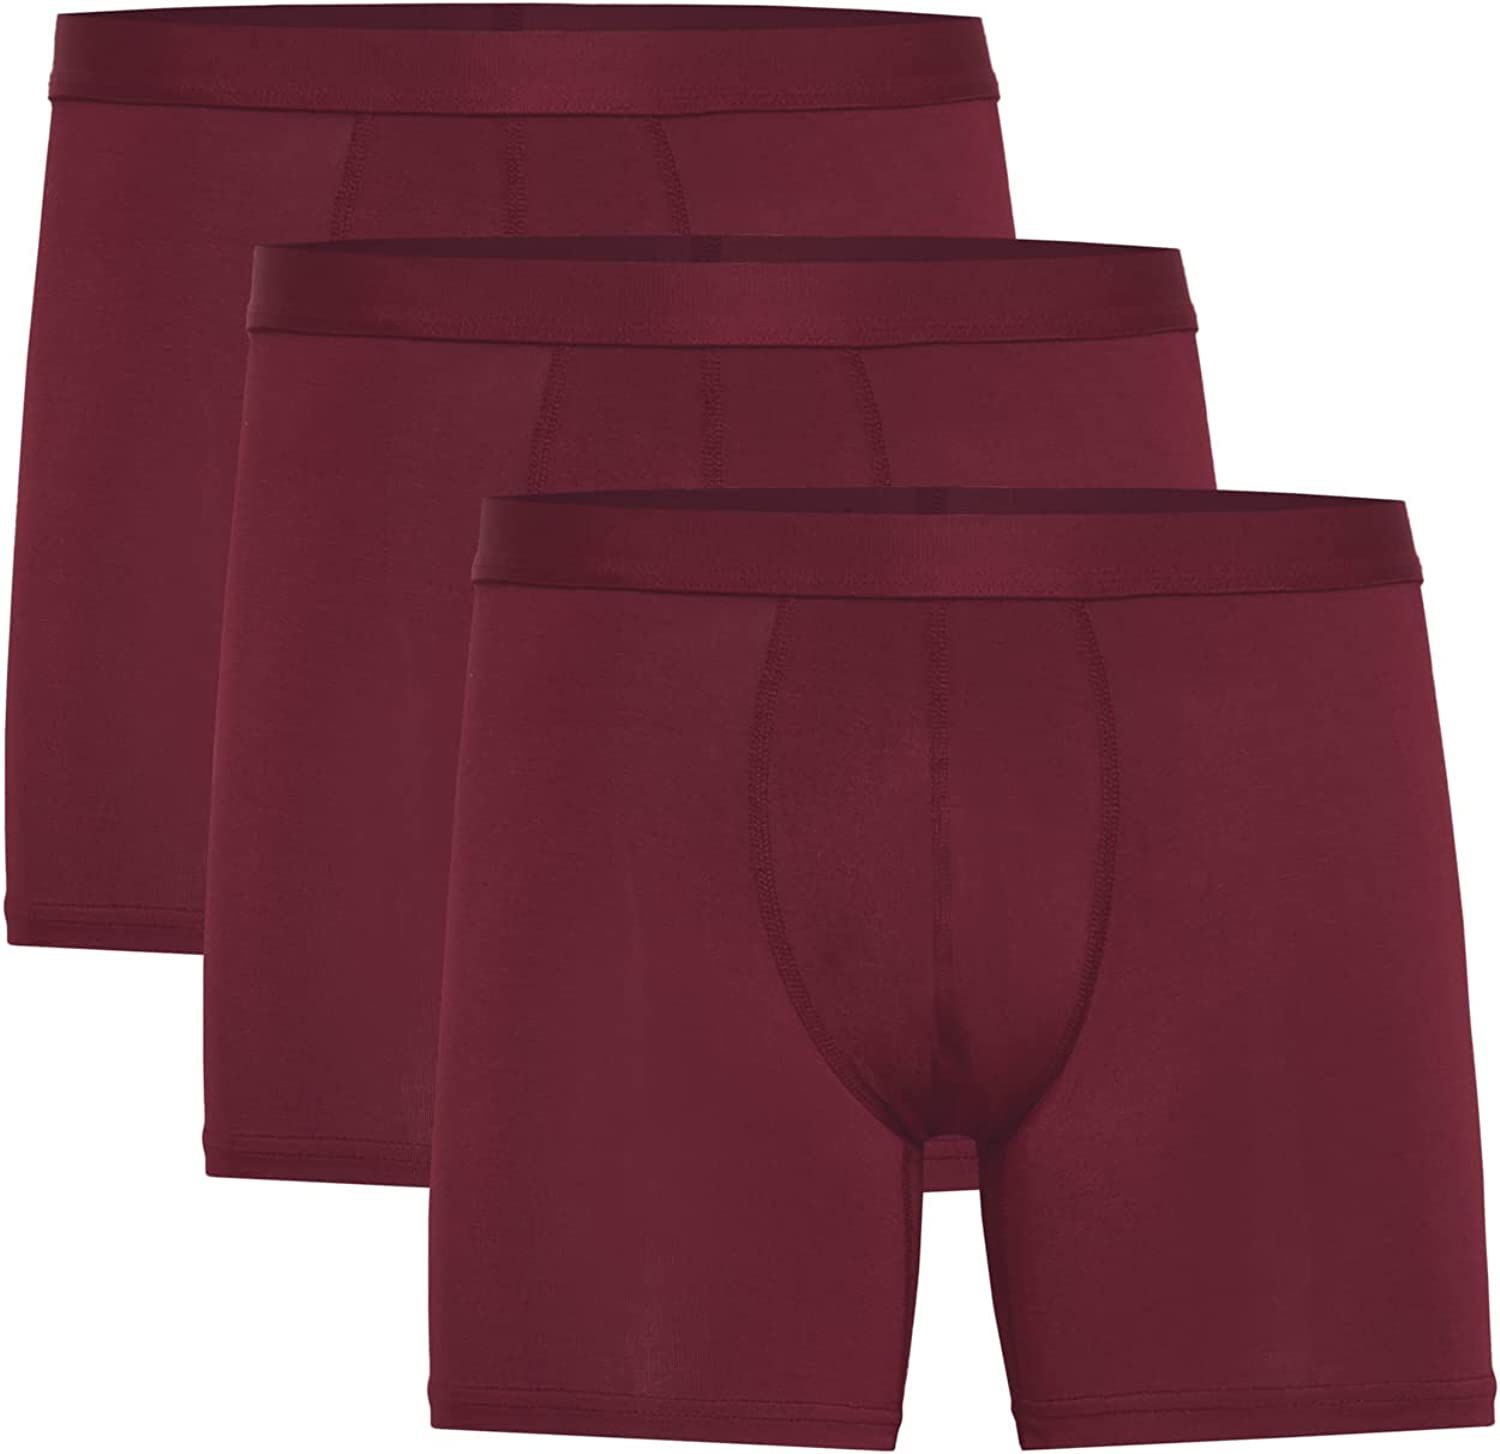 True Classic Men's Underwear Boxer Briefs, Ultra-Soft, Modern Fit (3 Pack)